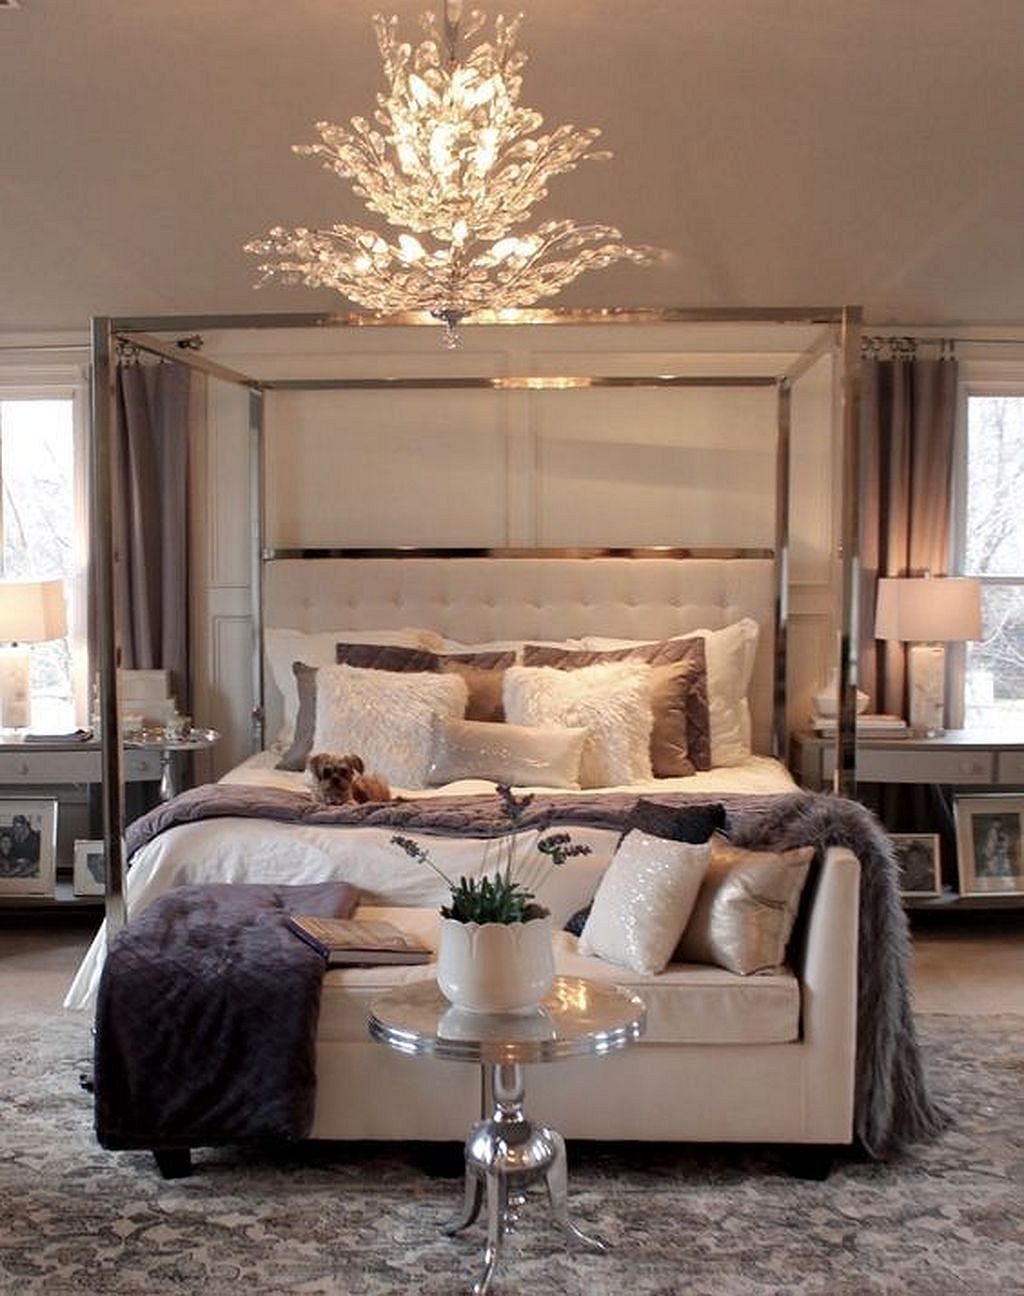 20 Elegant Small Master Bedroom Ideas Decorating - images of home design ideas